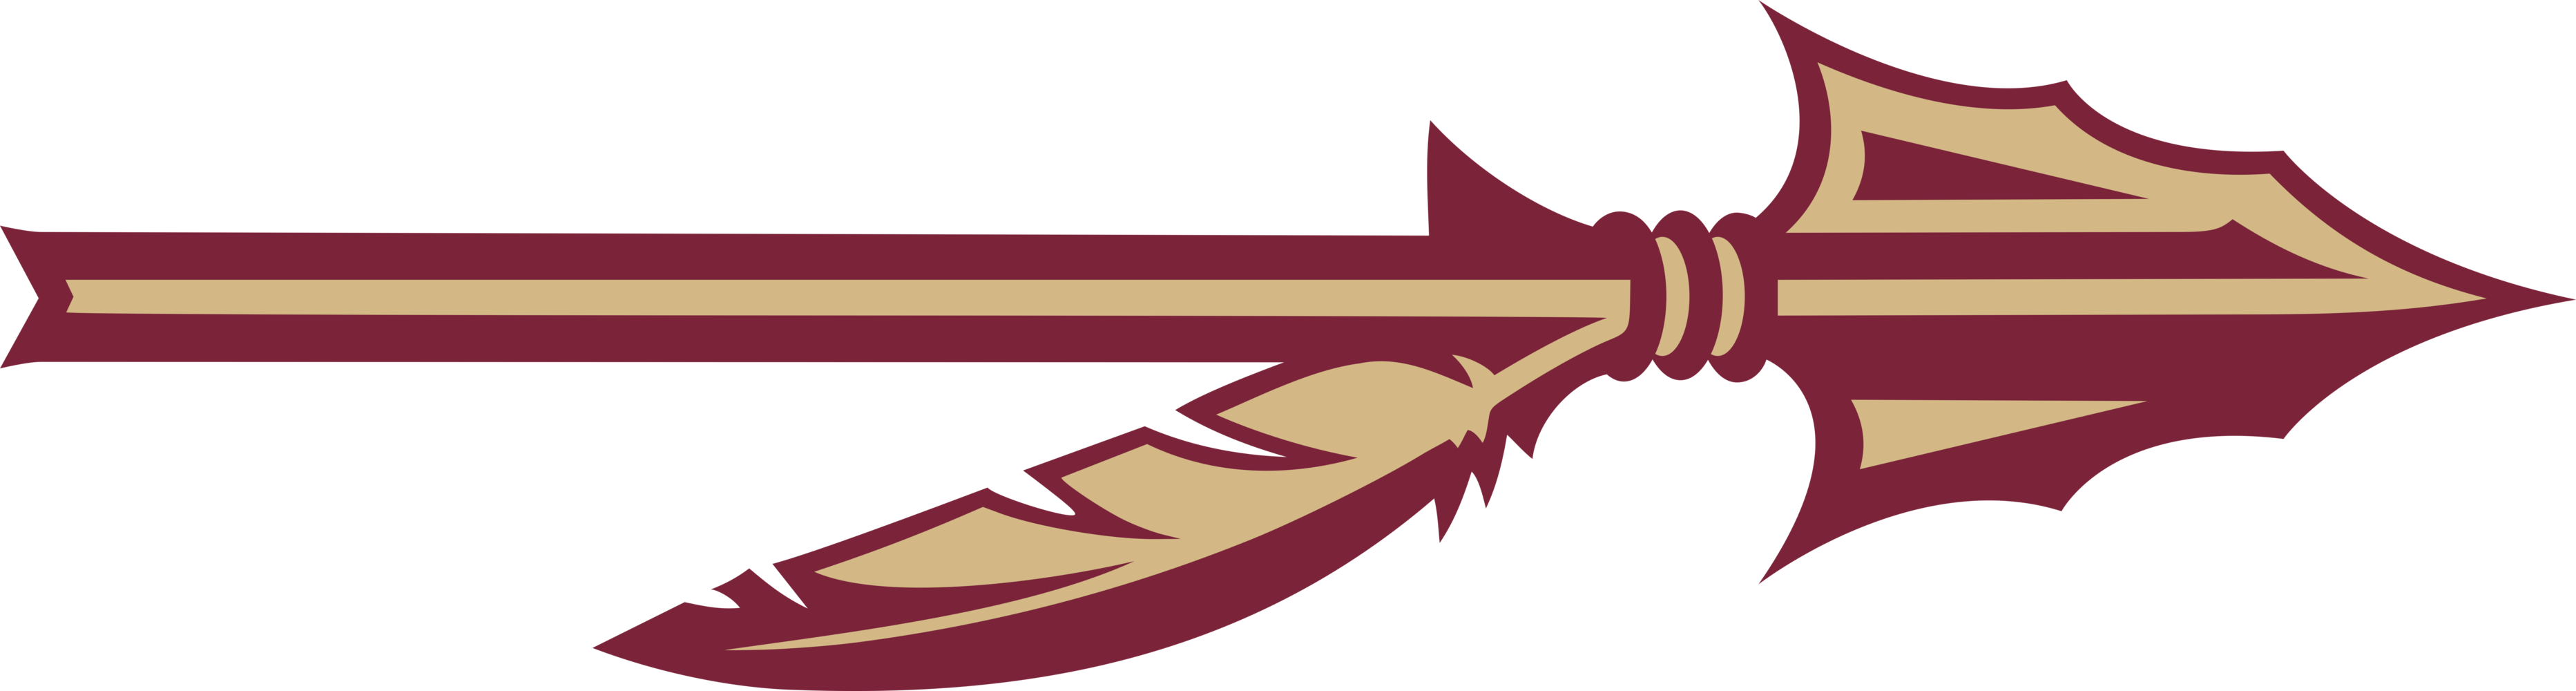 Spear Logo - Florida State Seminoles | Team Logos | Florida state seminoles ...